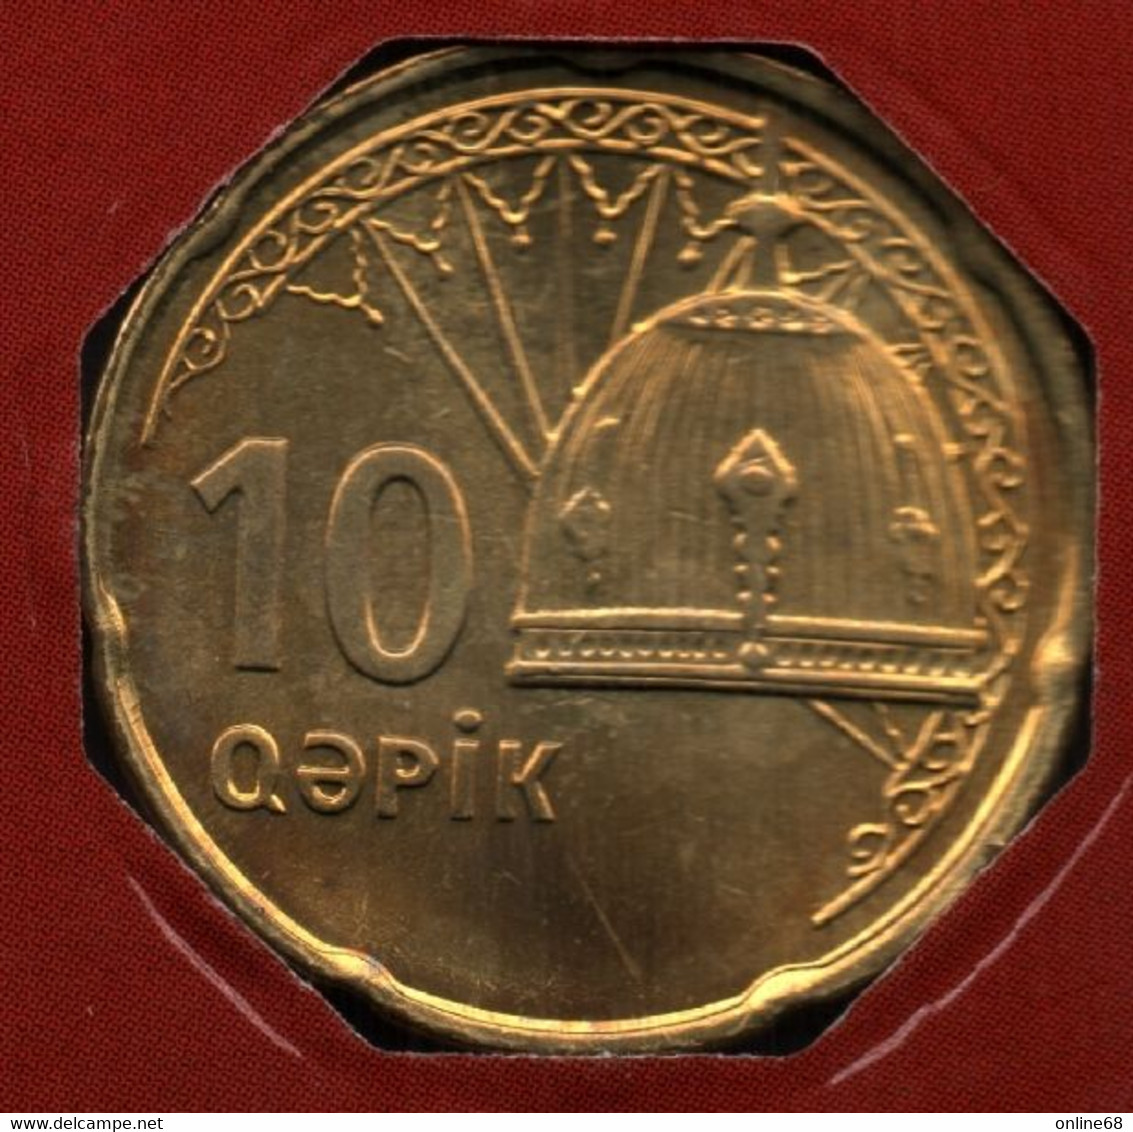 AZERBAIDJAN 10 QEPIK ND (2006)  KM# 42 - Aserbaidschan